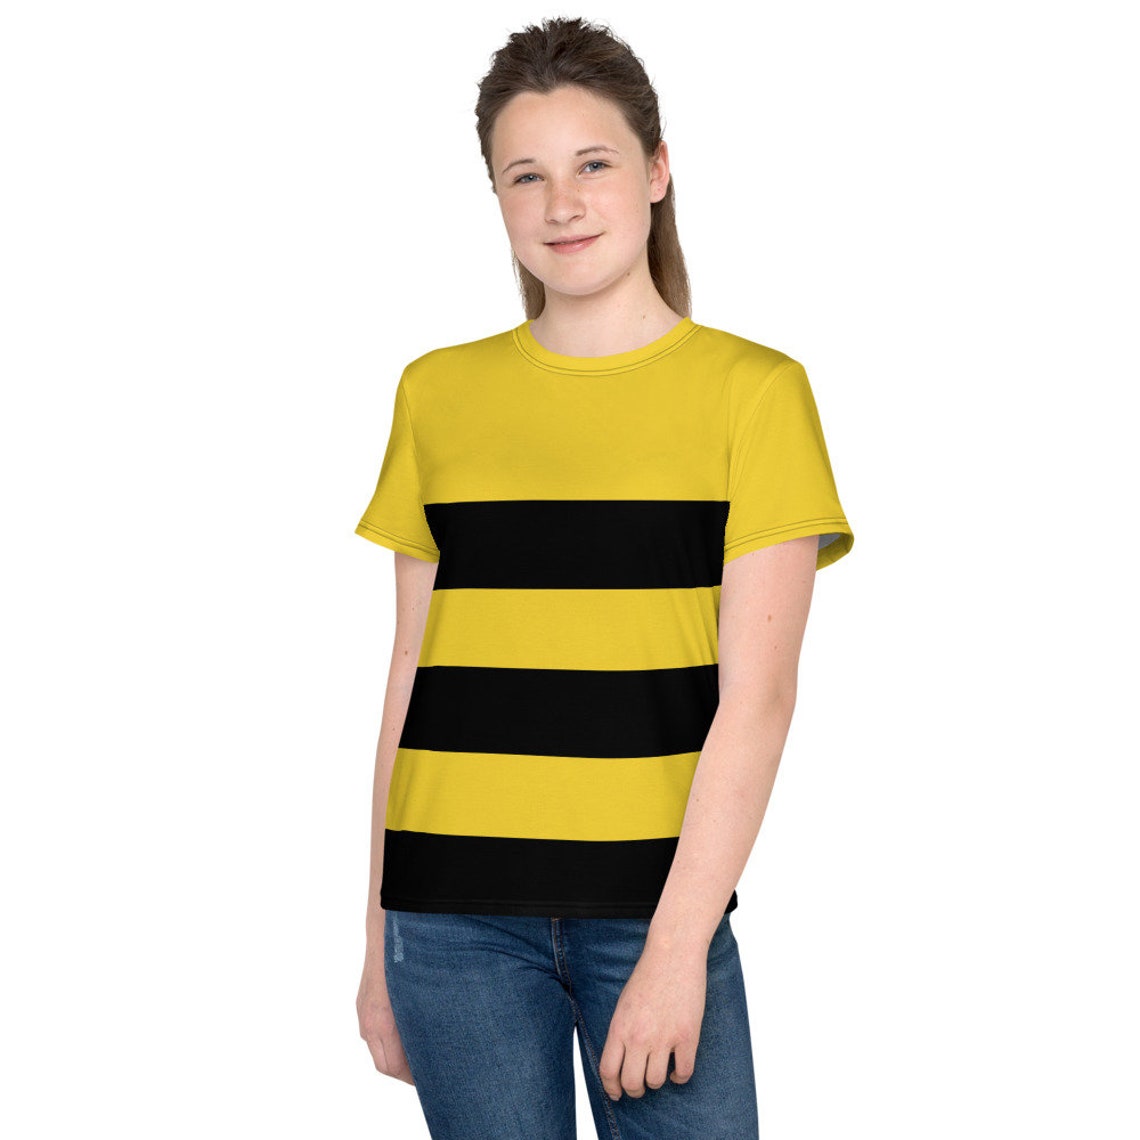 Bumble Bee Yellow Black Striped Kids Short Sleeve Shirt Easy Halloween ...